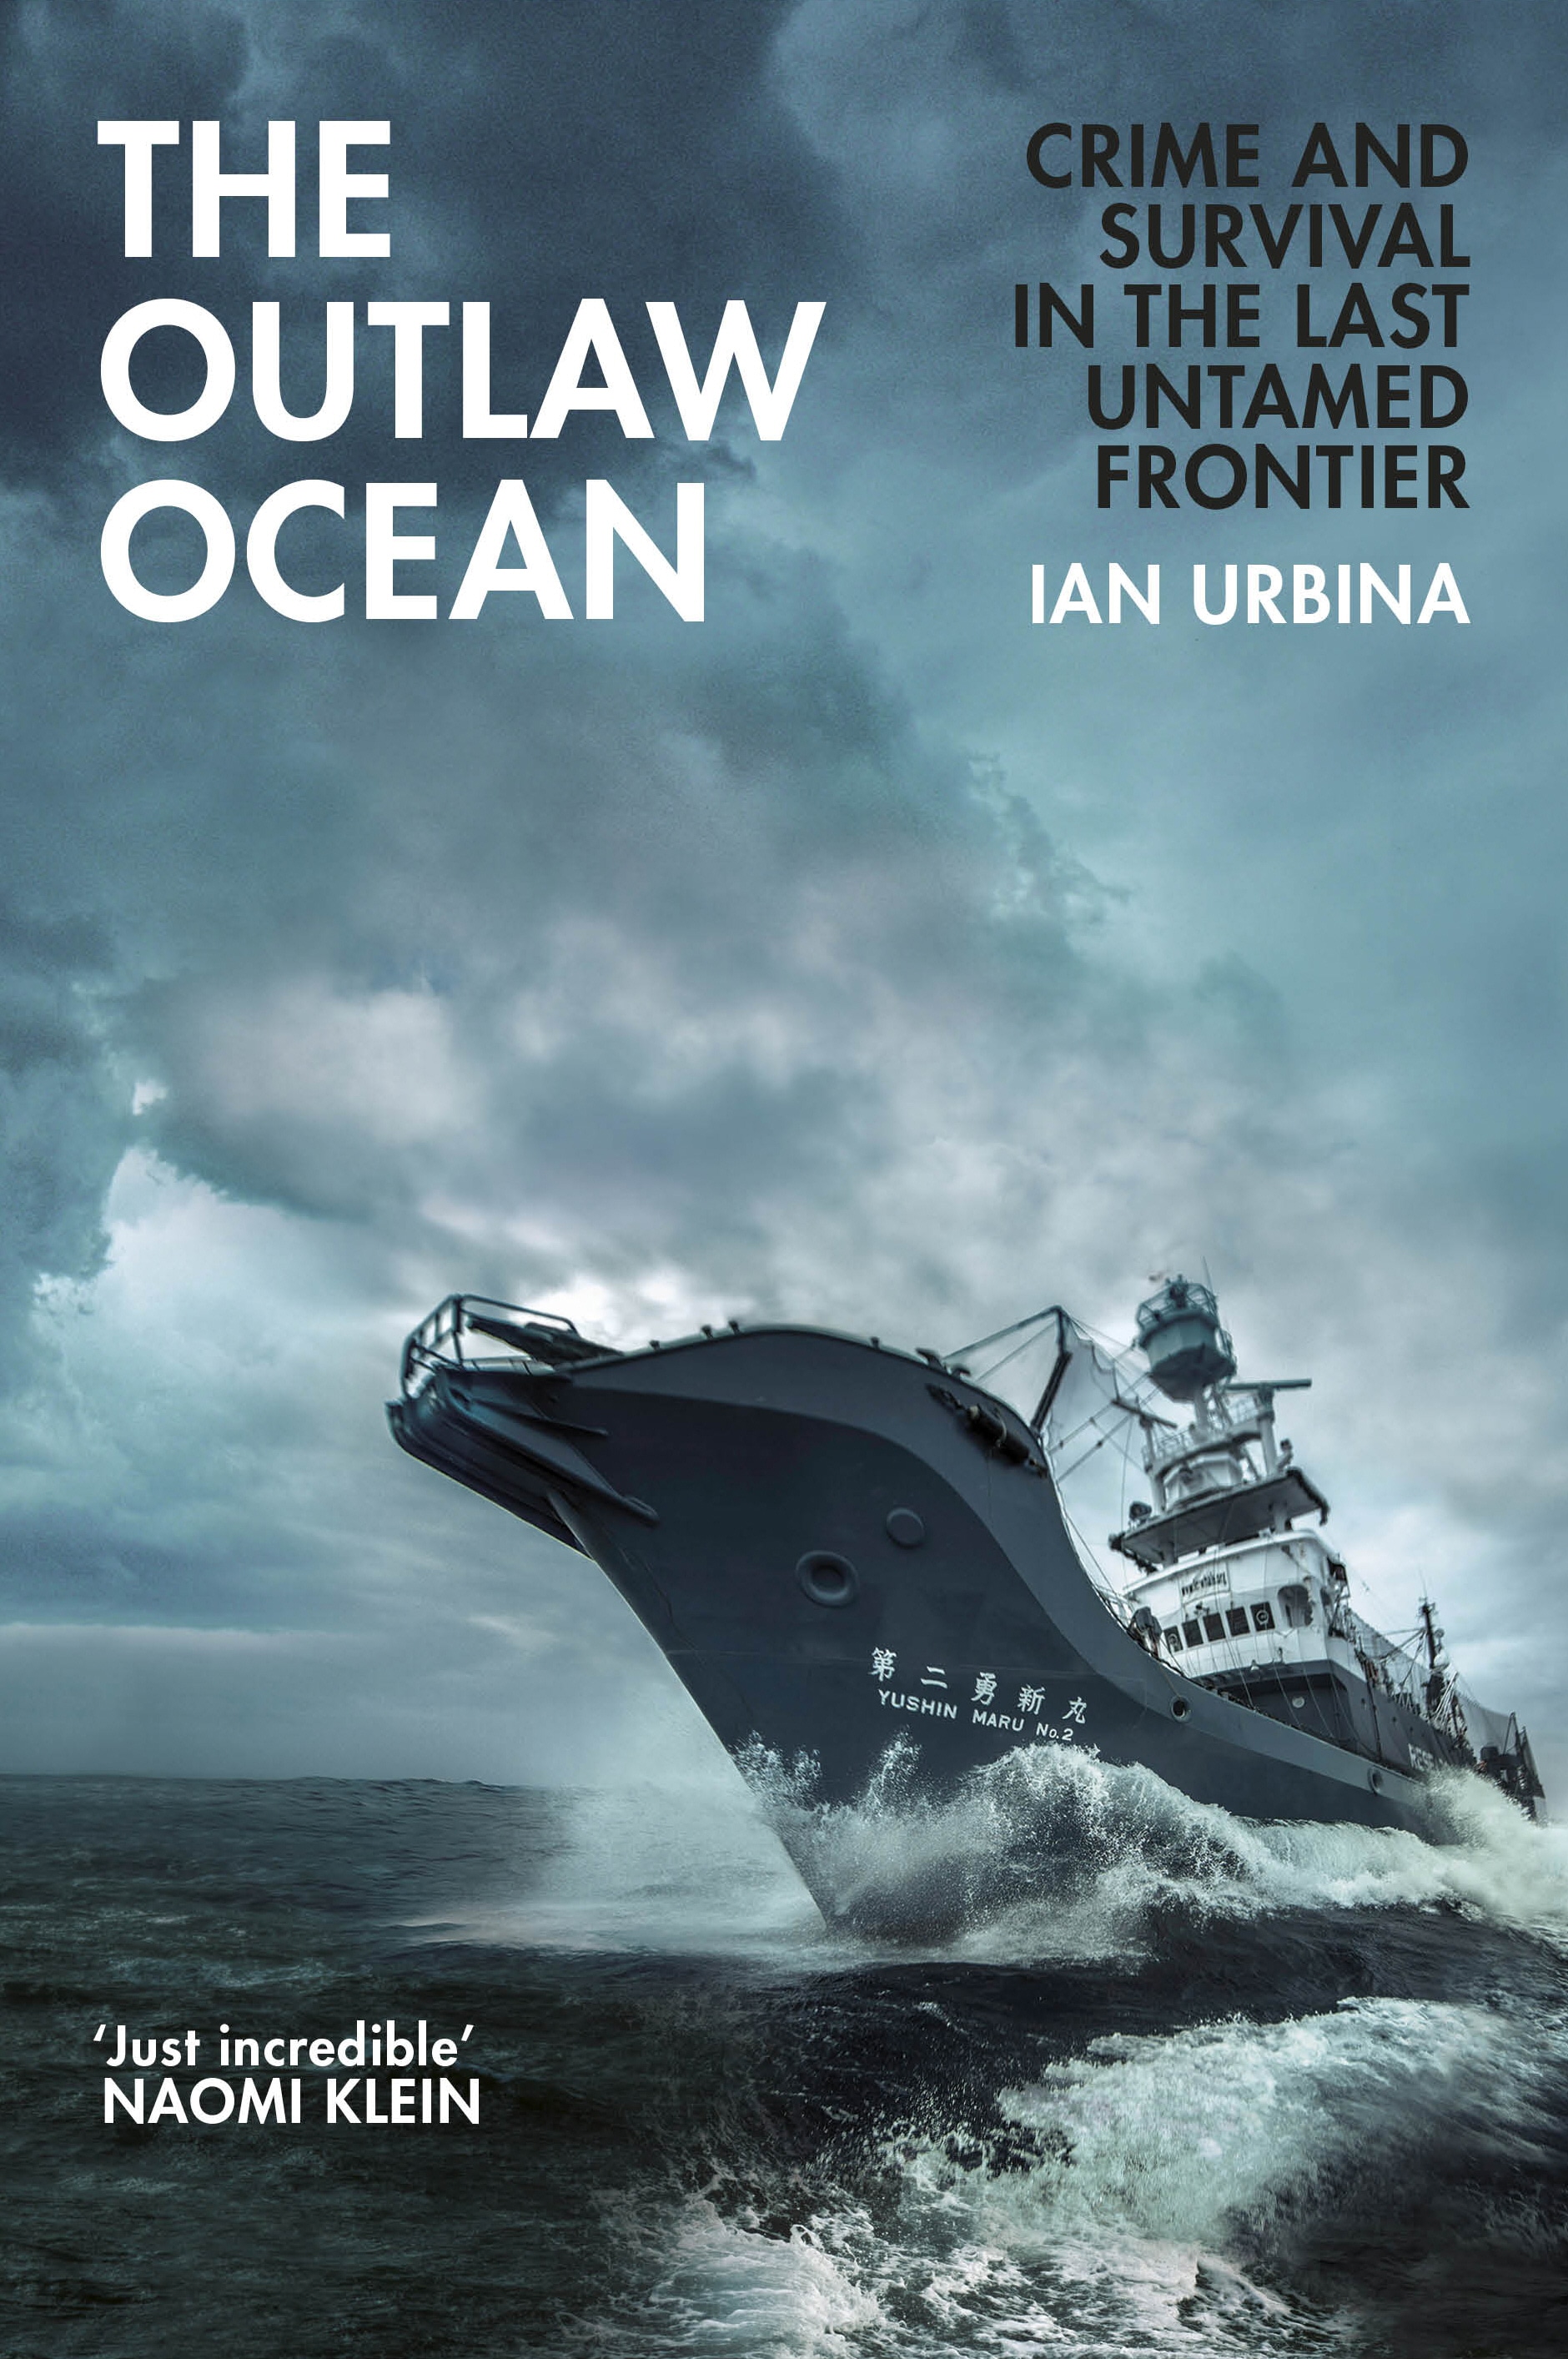 Book “The Outlaw Ocean” by Ian Urbina — September 19, 2019